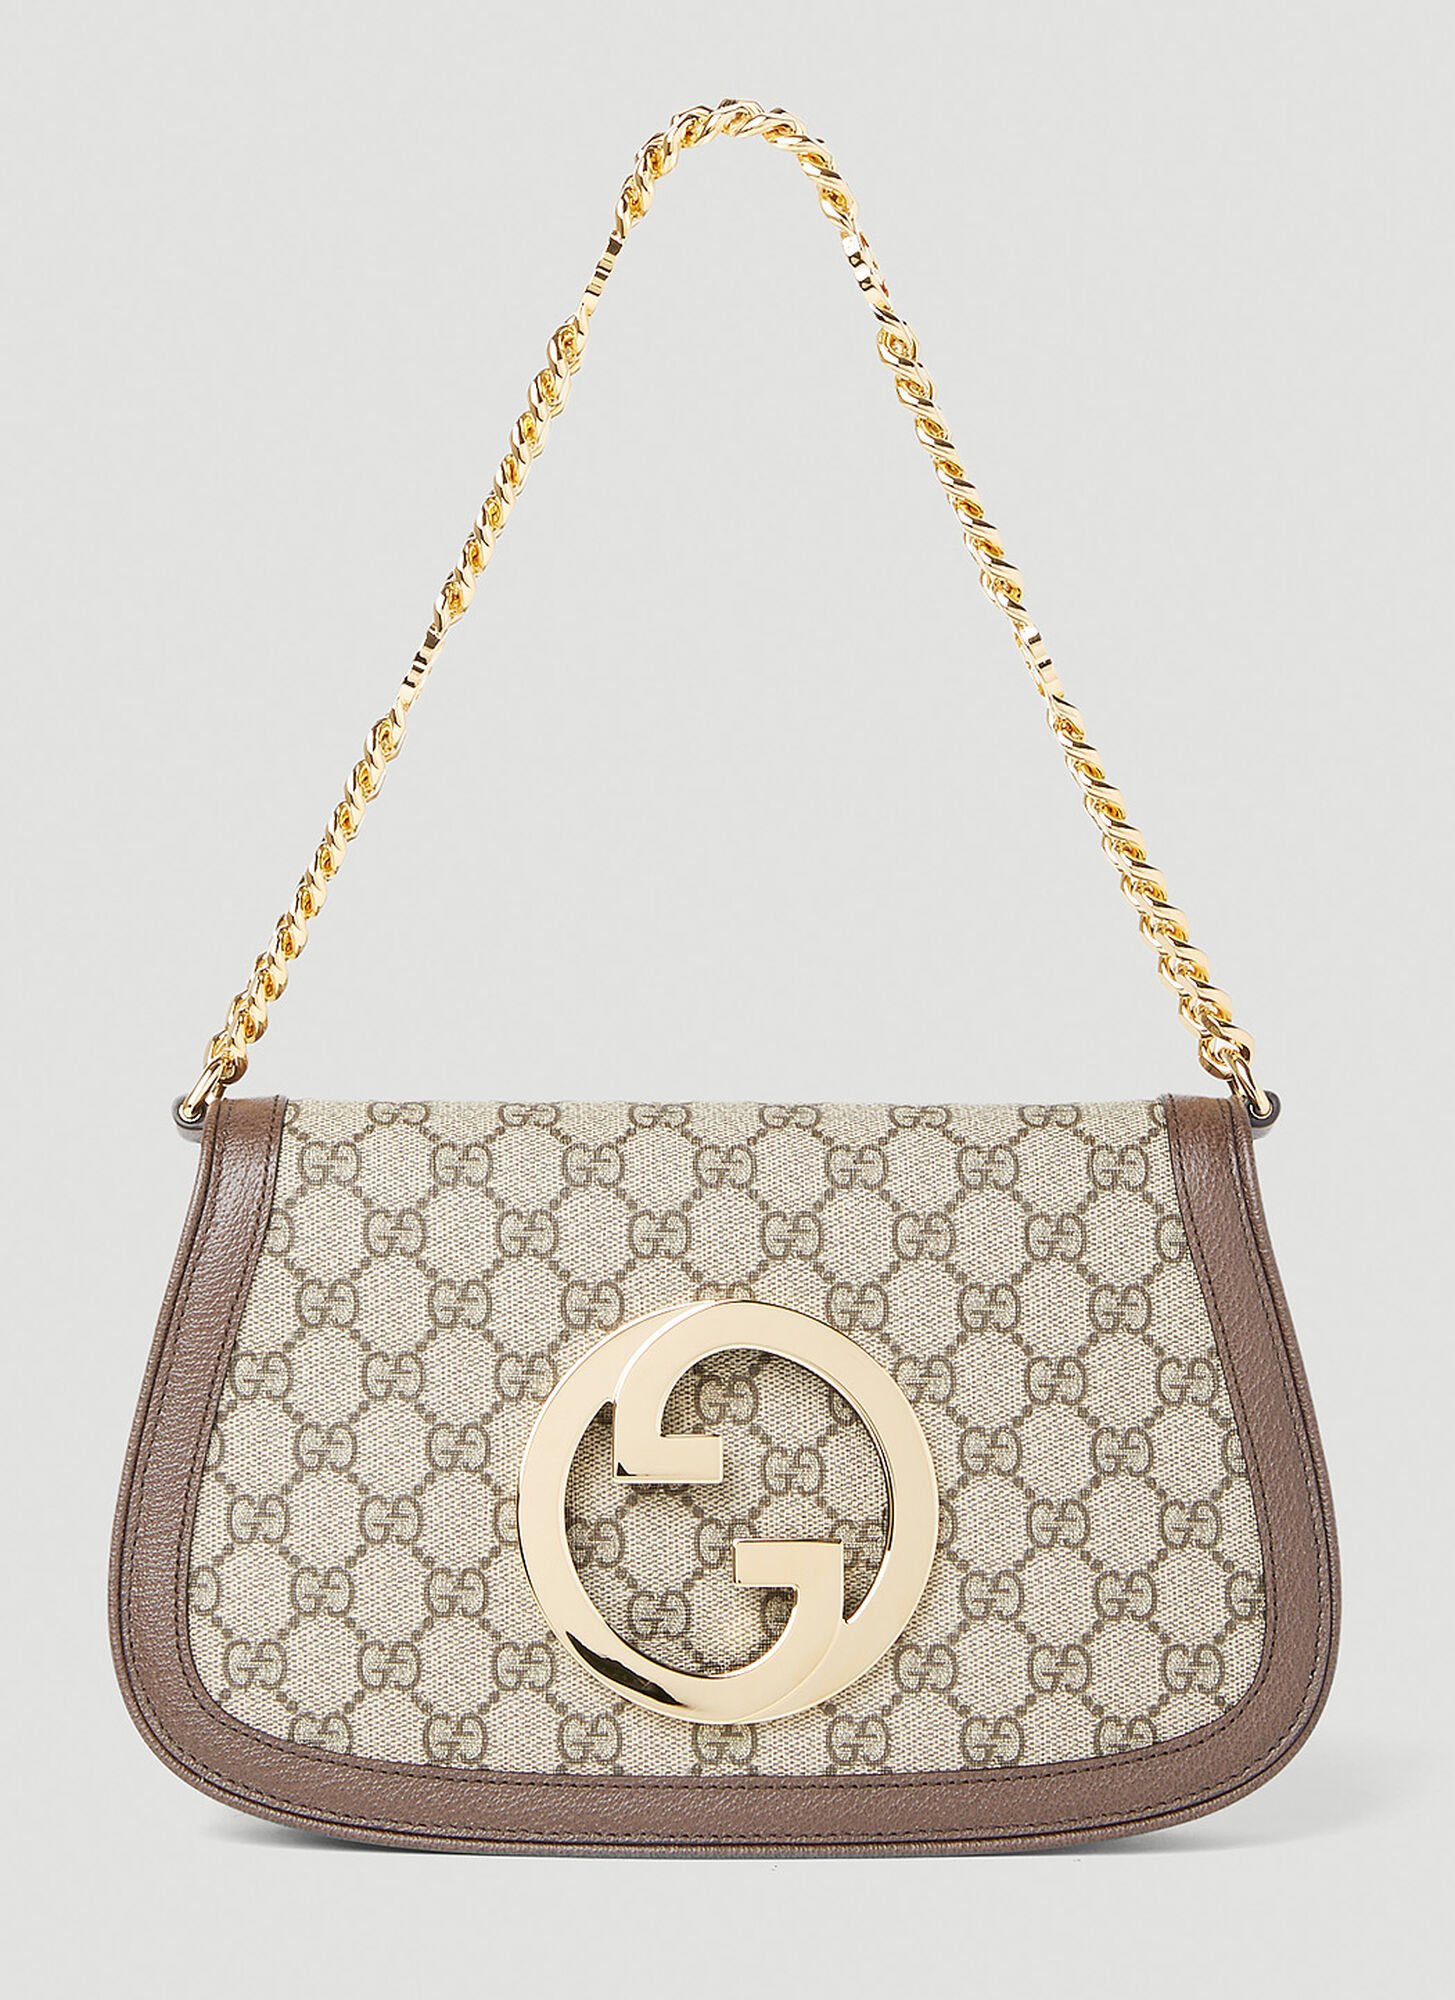 Gucci Blondie Chain Shoulder Bag In Brown